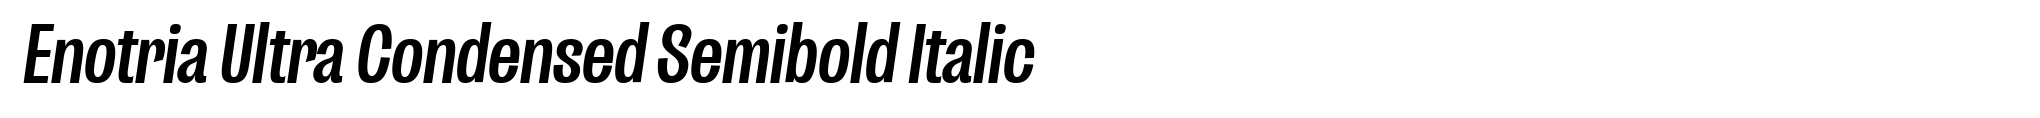 Enotria Ultra Condensed Semibold Italic image